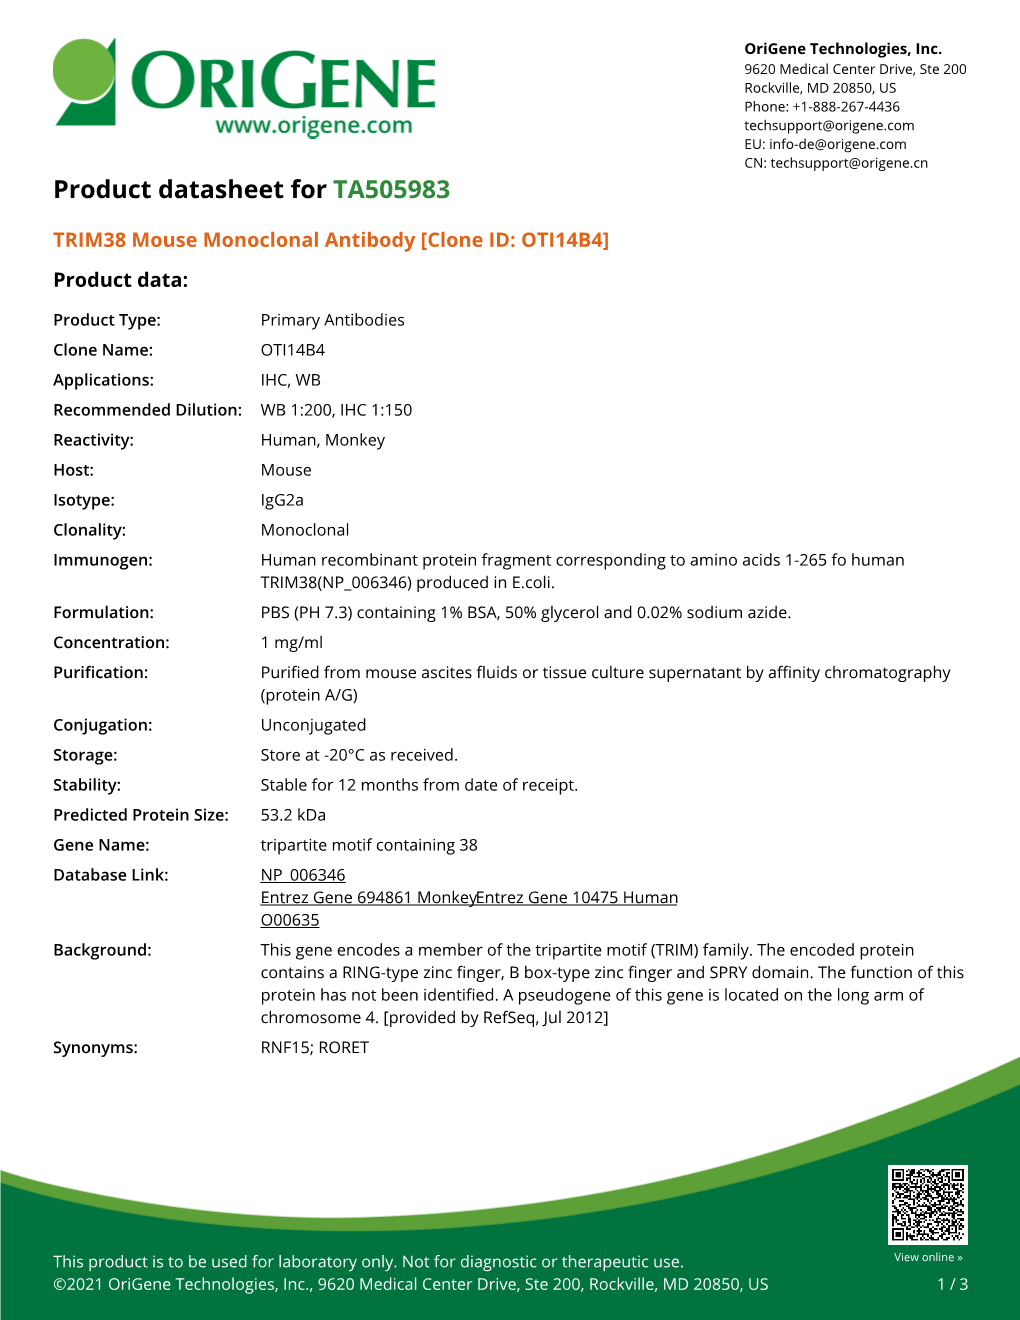 TRIM38 Mouse Monoclonal Antibody [Clone ID: OTI14B4] Product Data